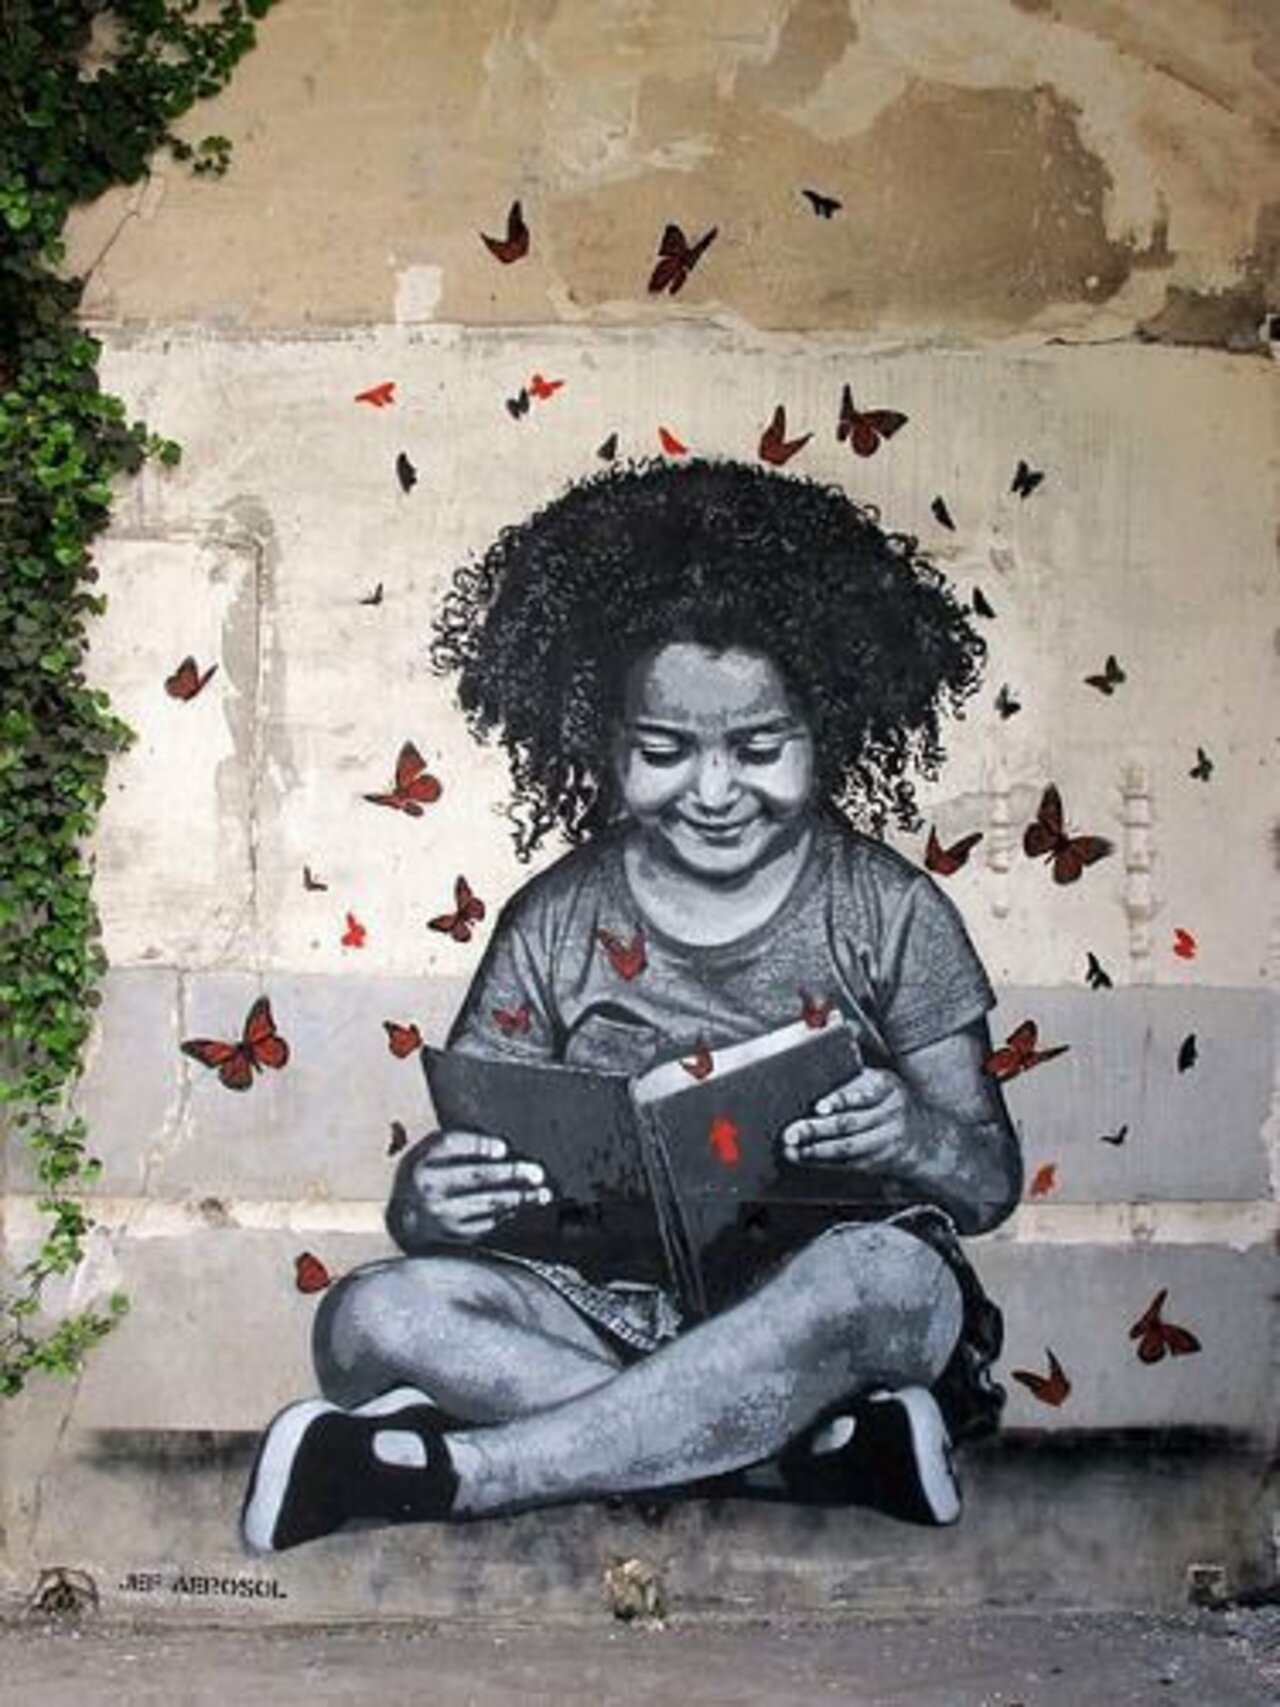 #Illusion, #Dreams, #Imagination All inside a Book – #Creative #Streetart http://beartistbeart.com/2016/12/19/illusion-dreams-imagination-all-inside-a-book-creative-streetart https://t.co/wLieLbYl7P